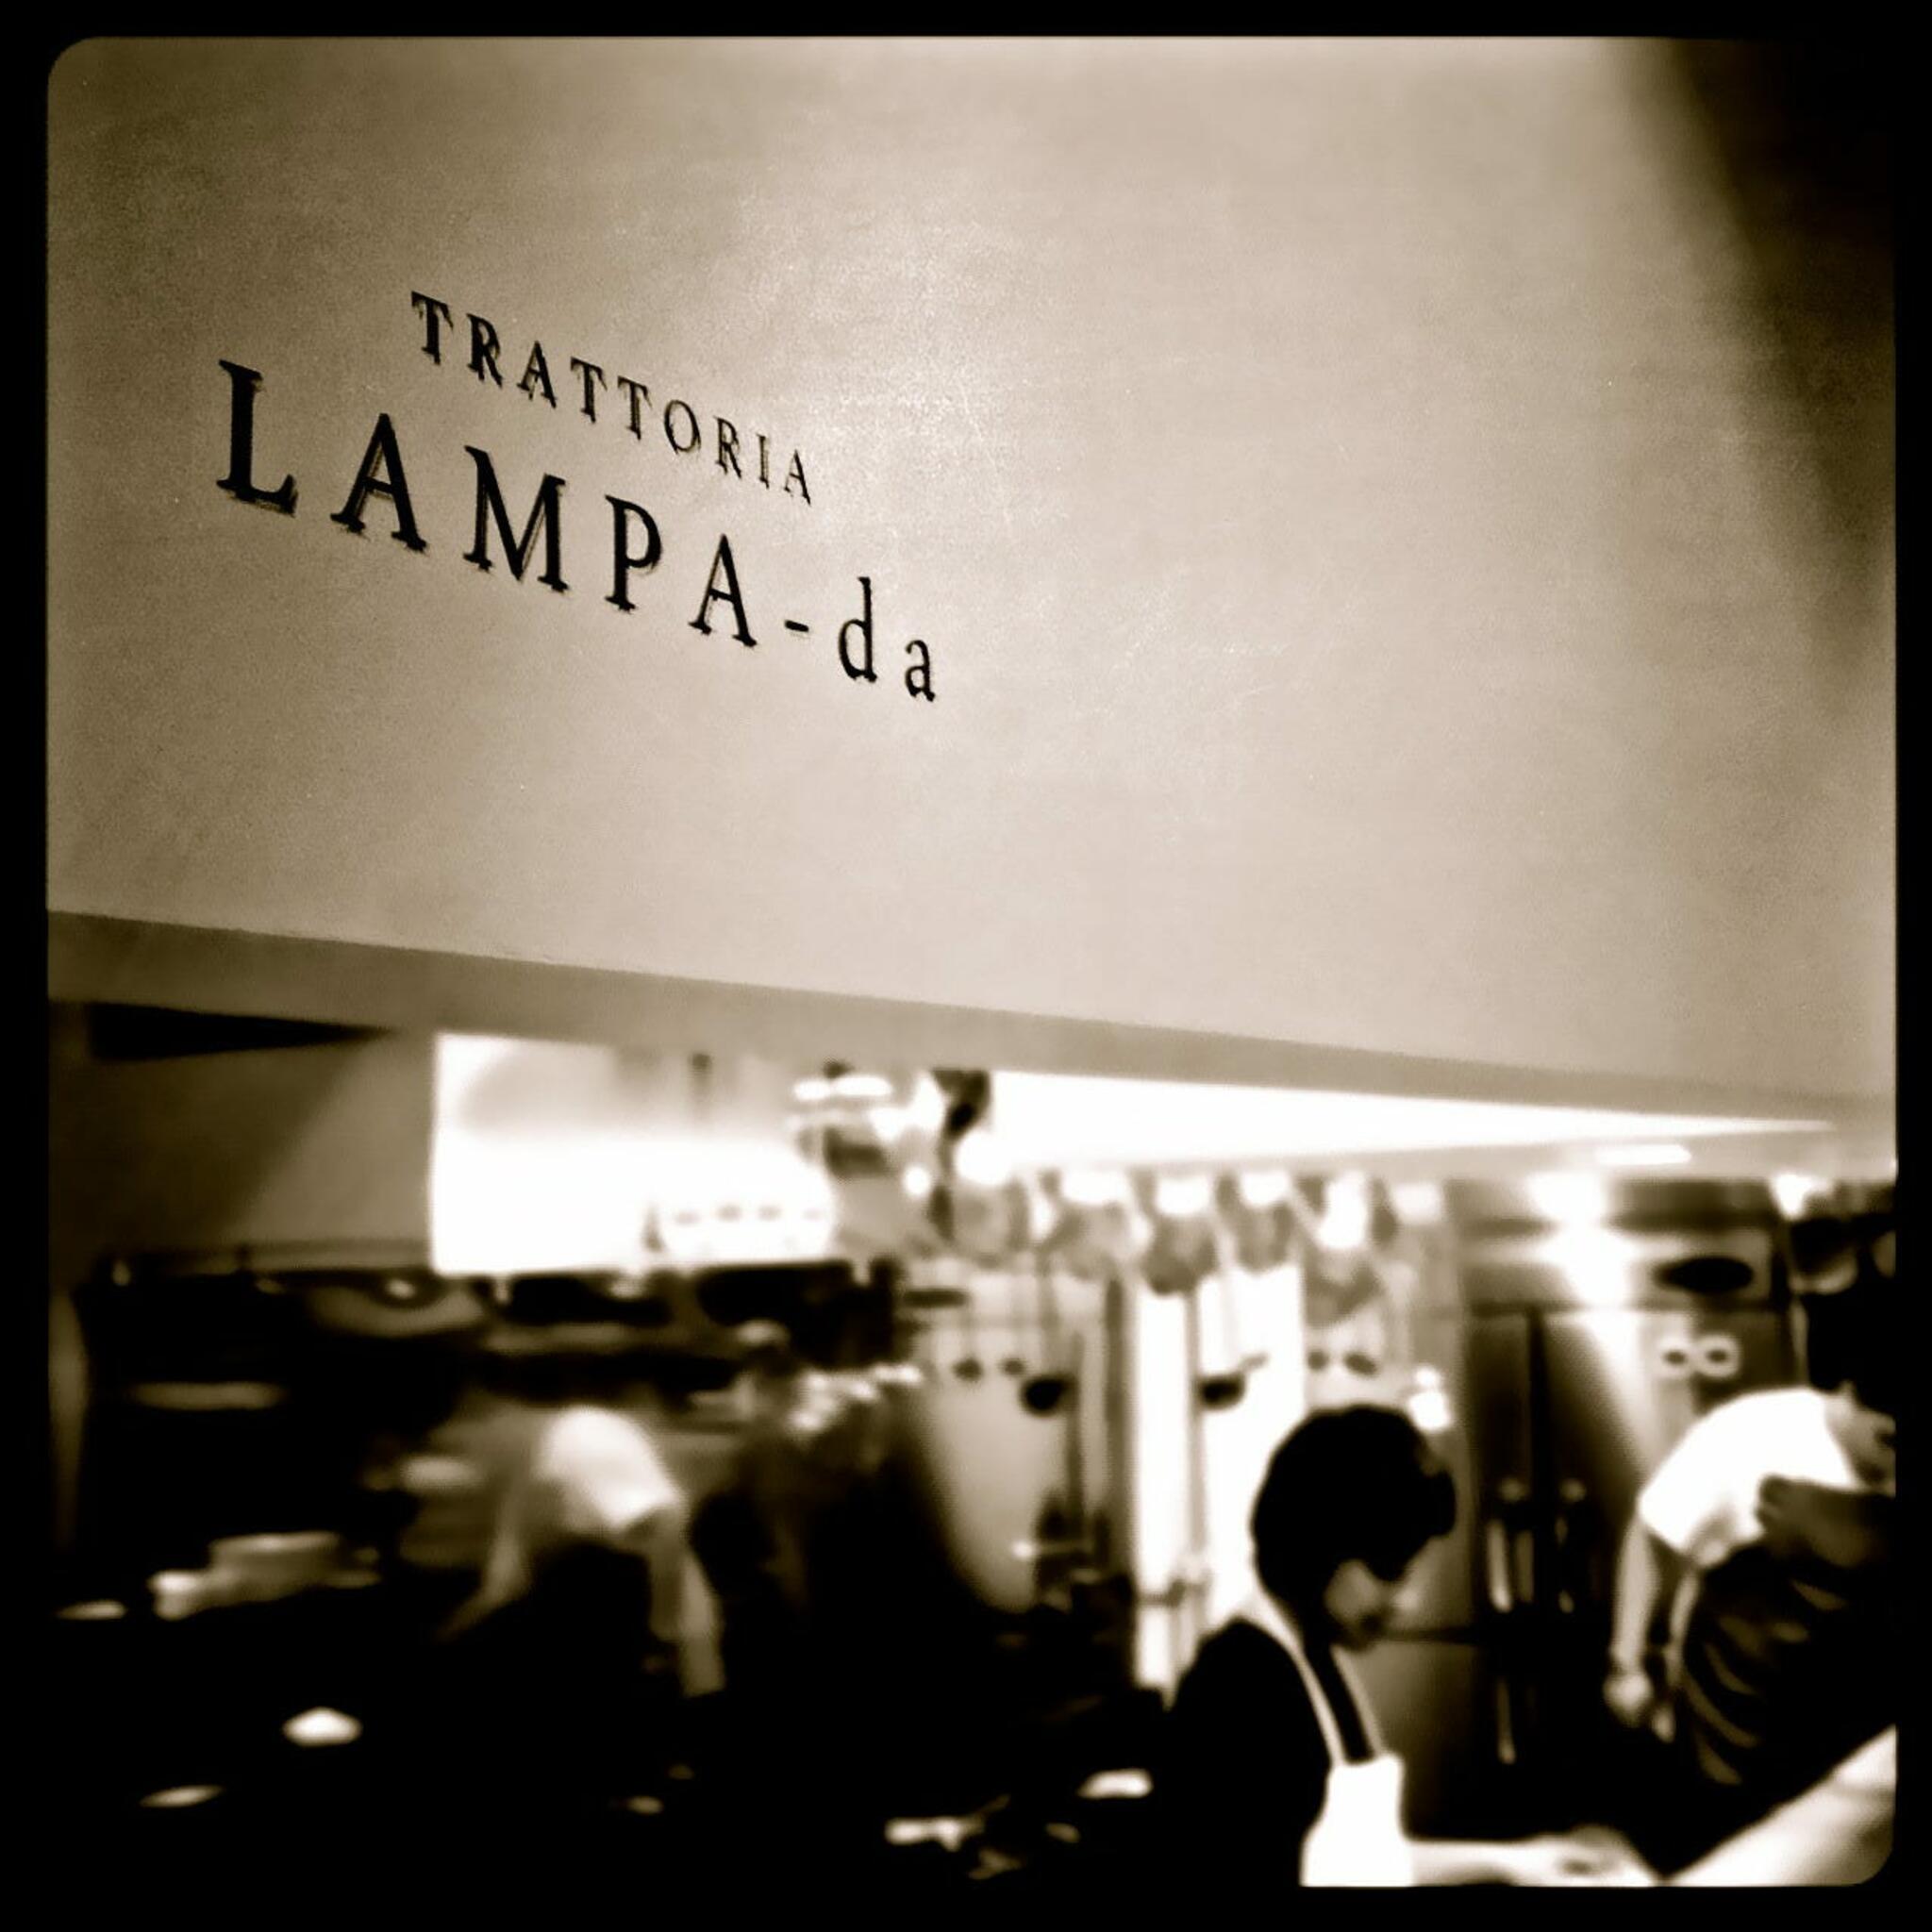 TRATTORIA LAMPA-da(ランパーダ)の代表写真6